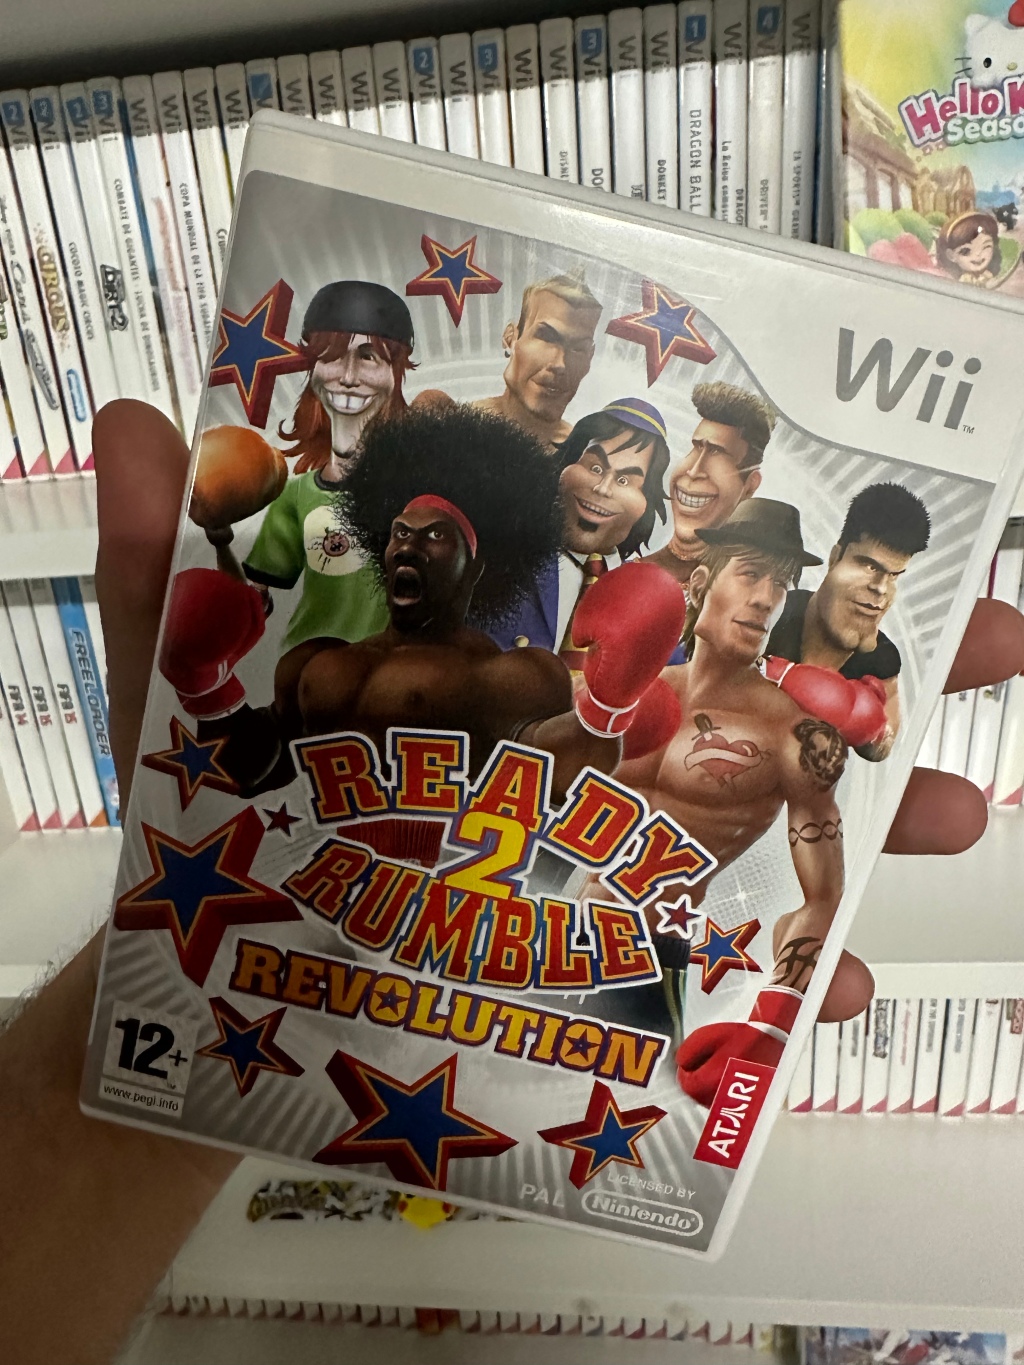 Ready 2 Rumble Revolution (Wii, 2009) – Arcade Boxing Fun 🥊🎮😆